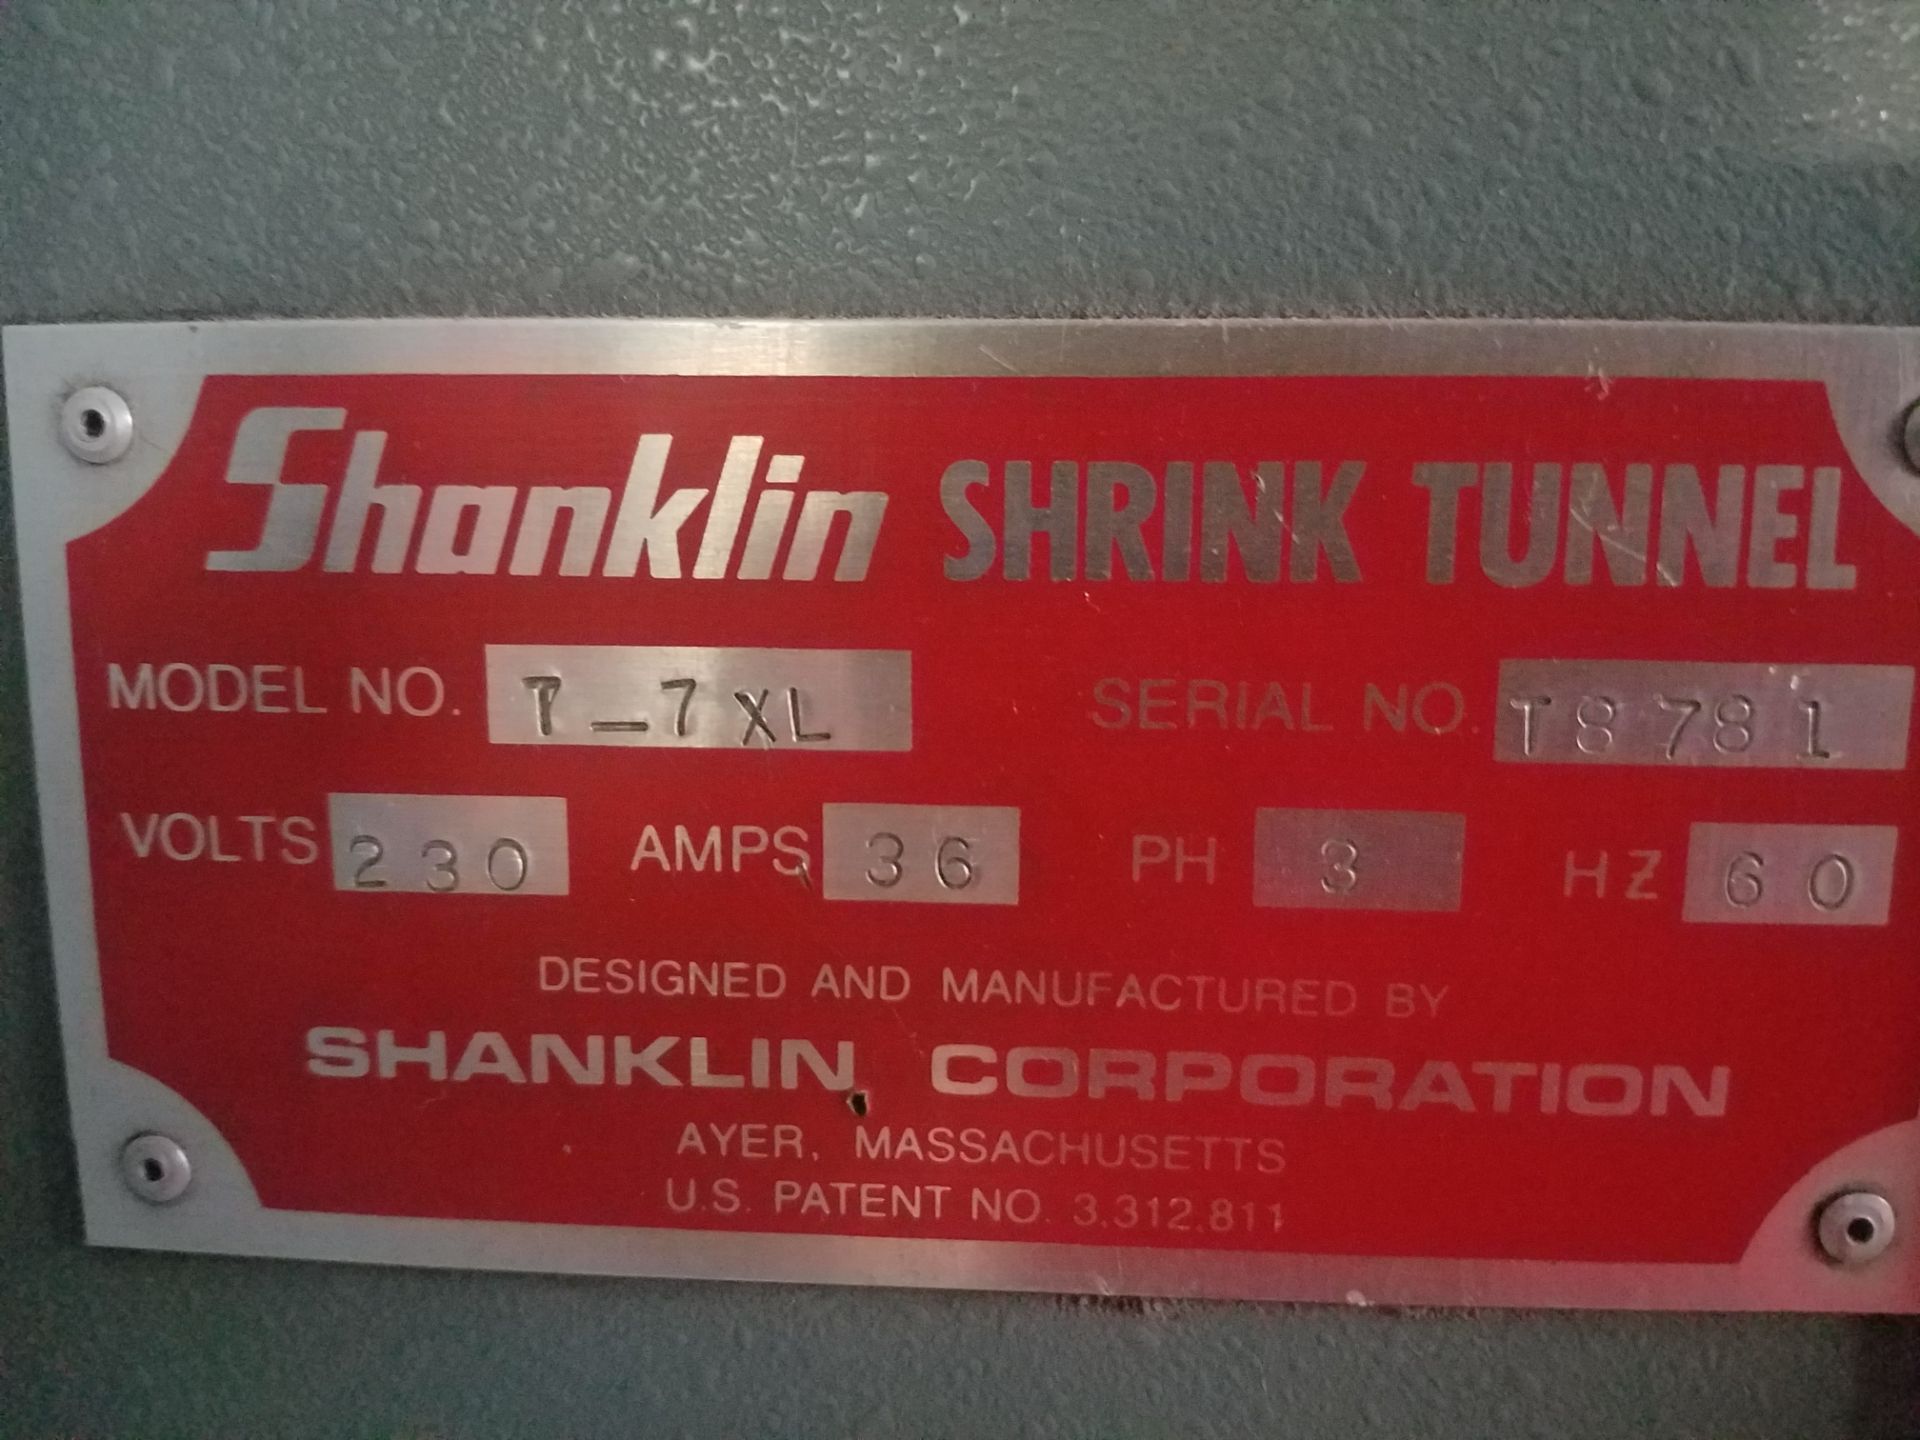 Shanklin T-7XL Shrink Tunnel, Serial # T8781, Volt 230, 3-Phase (Loading, Rigging & Site Management - Image 5 of 5